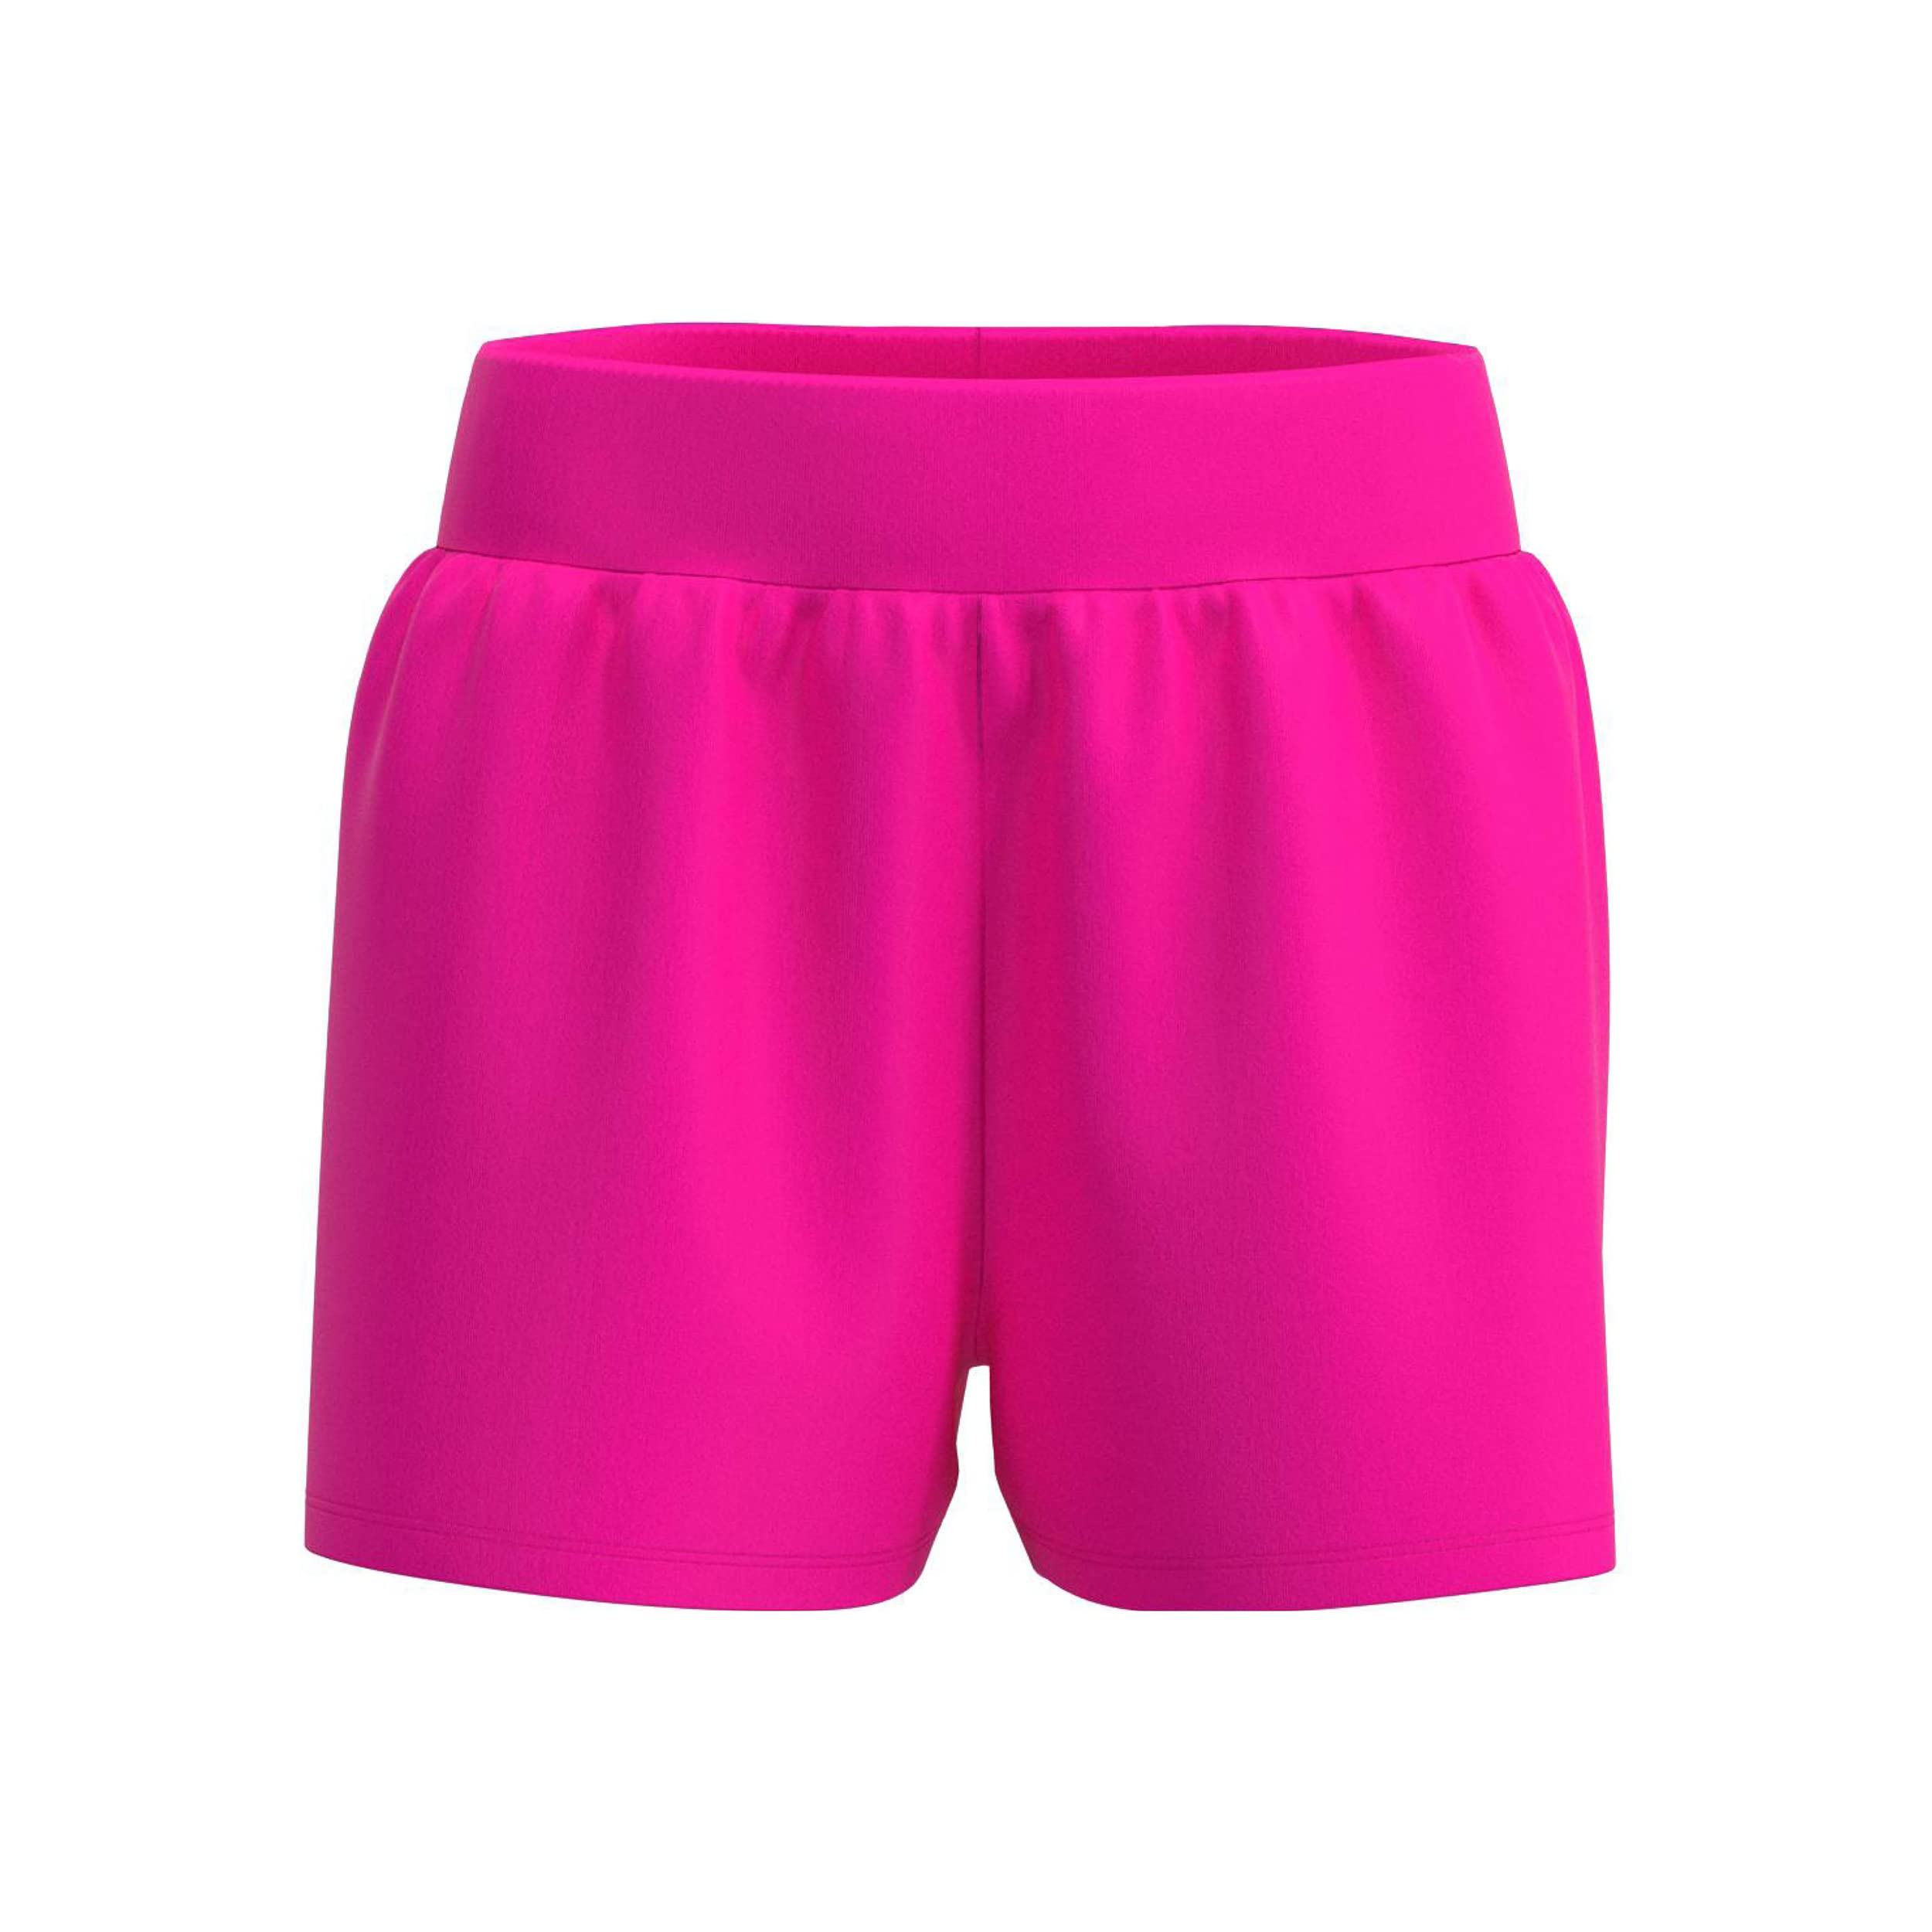 BIDI BADU Damen Crew 2In1 Shorts - pink, Größe:XS